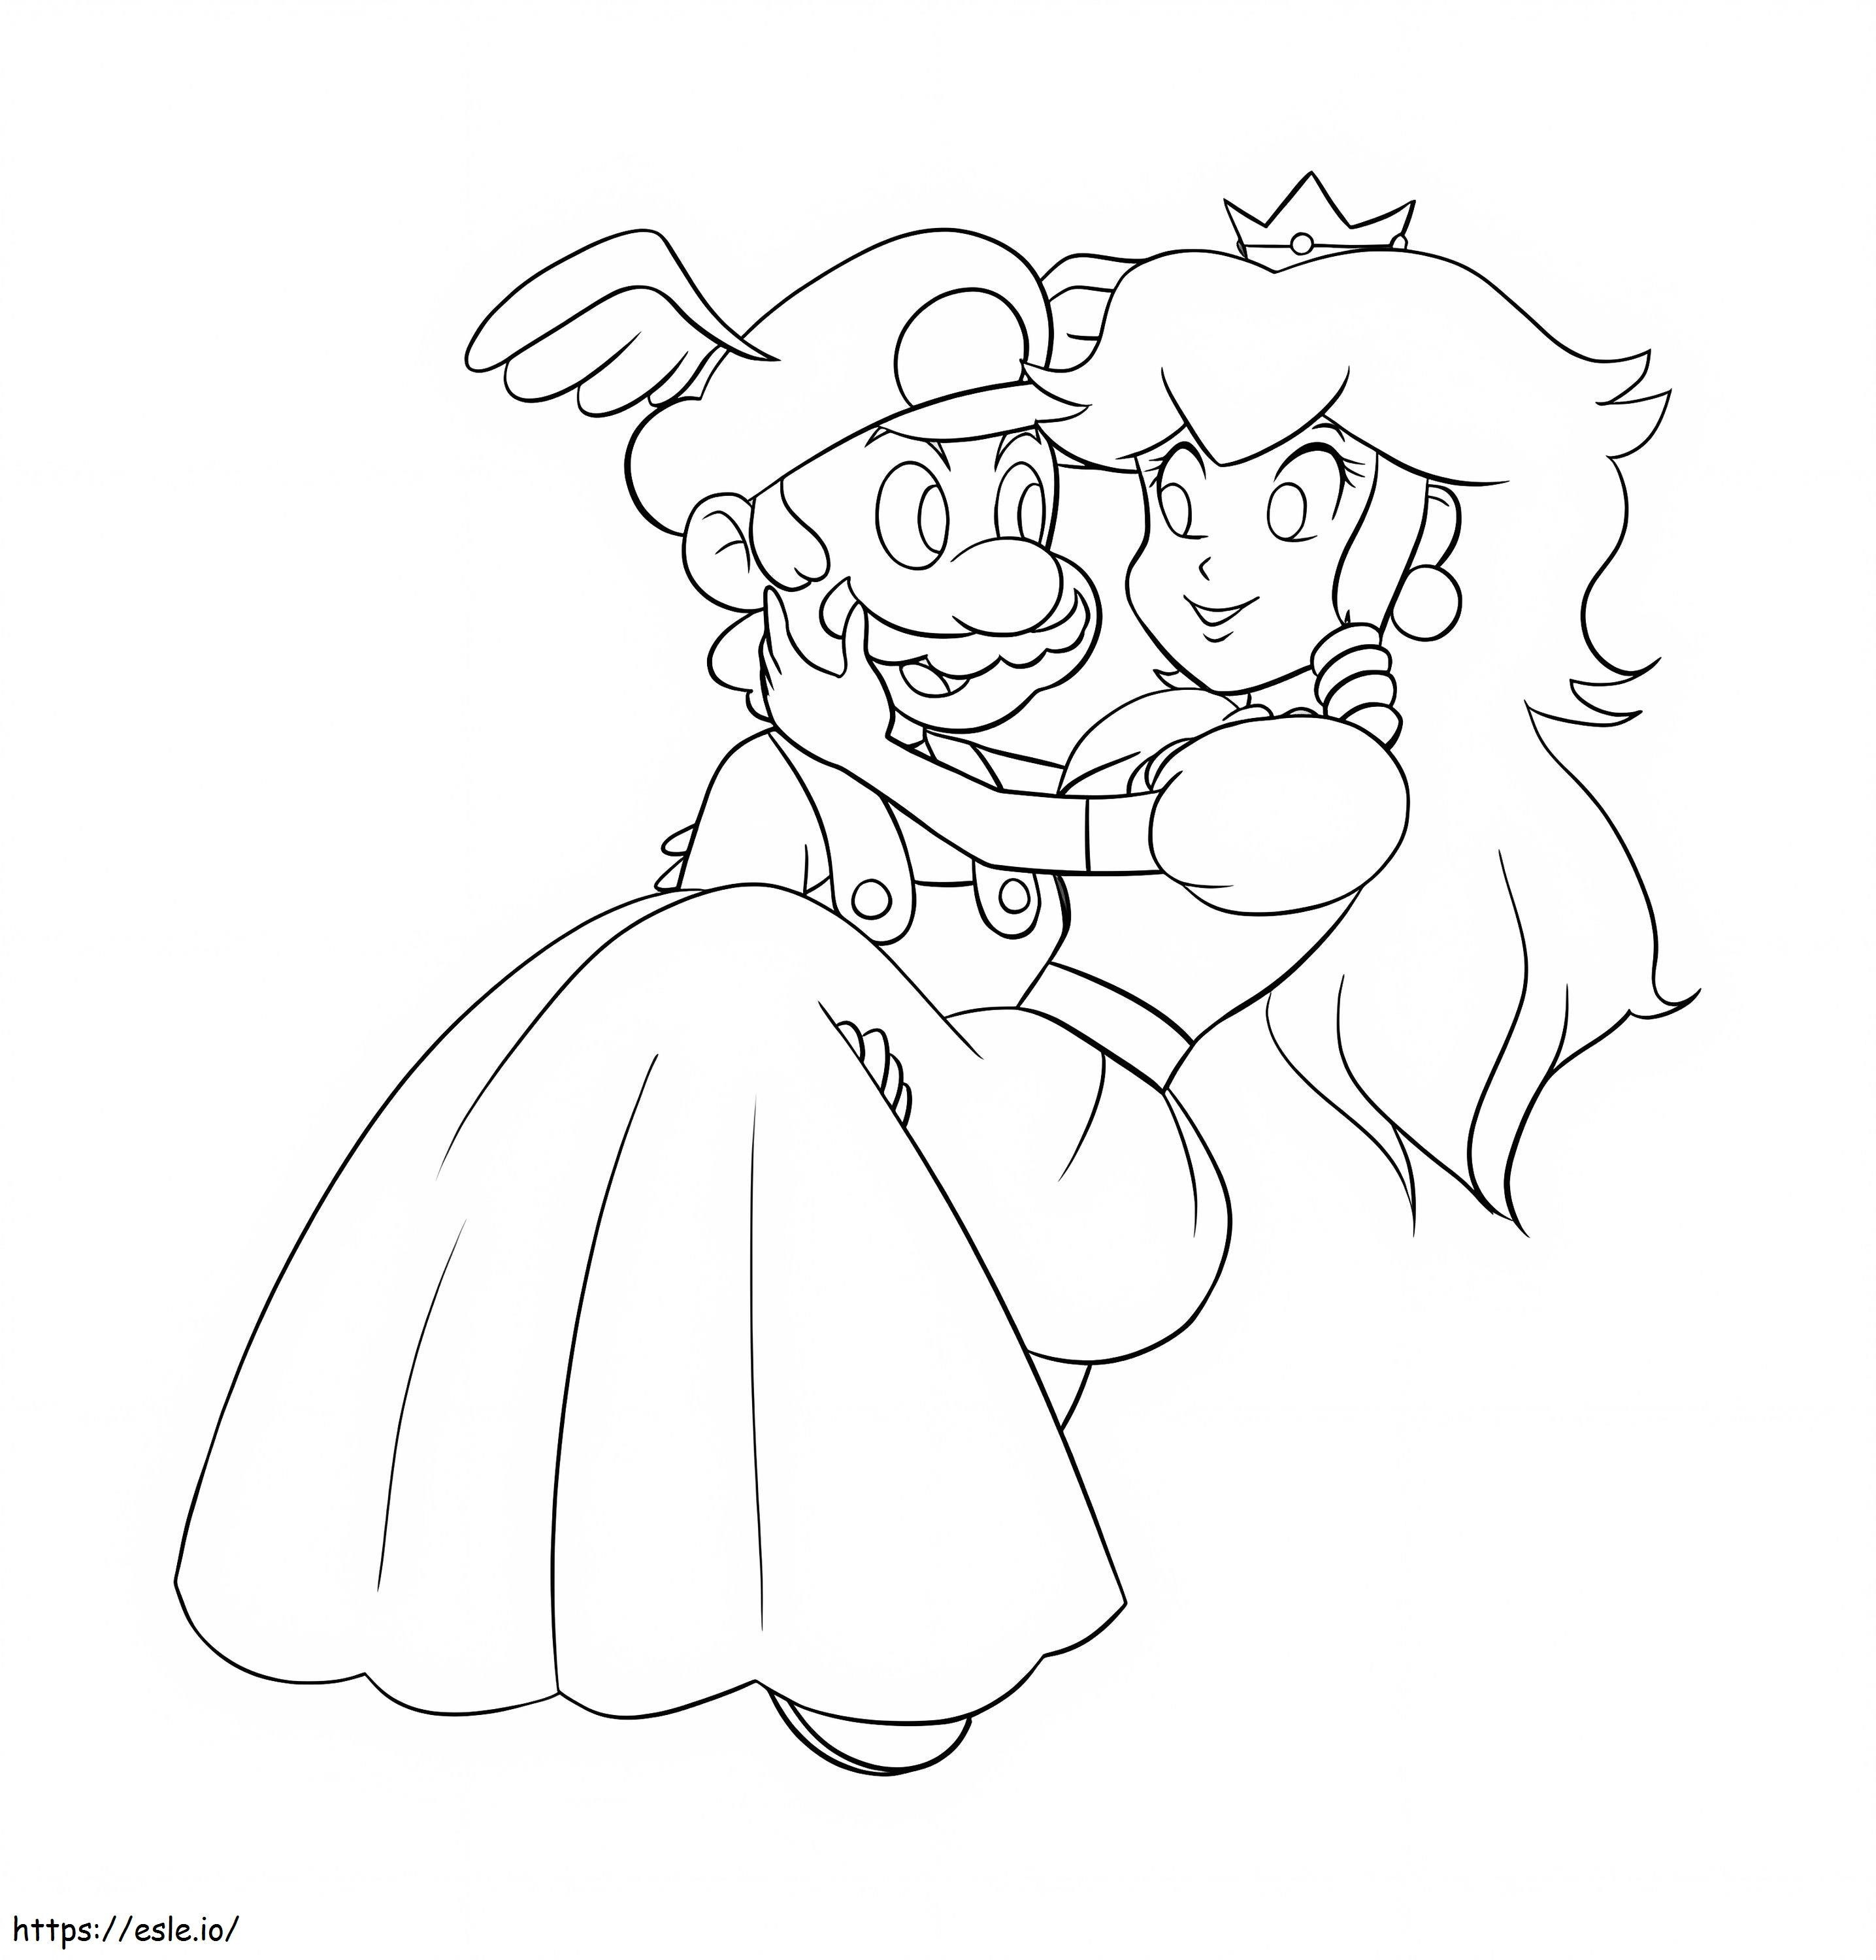 Mario Carrying Princess Peach coloring page